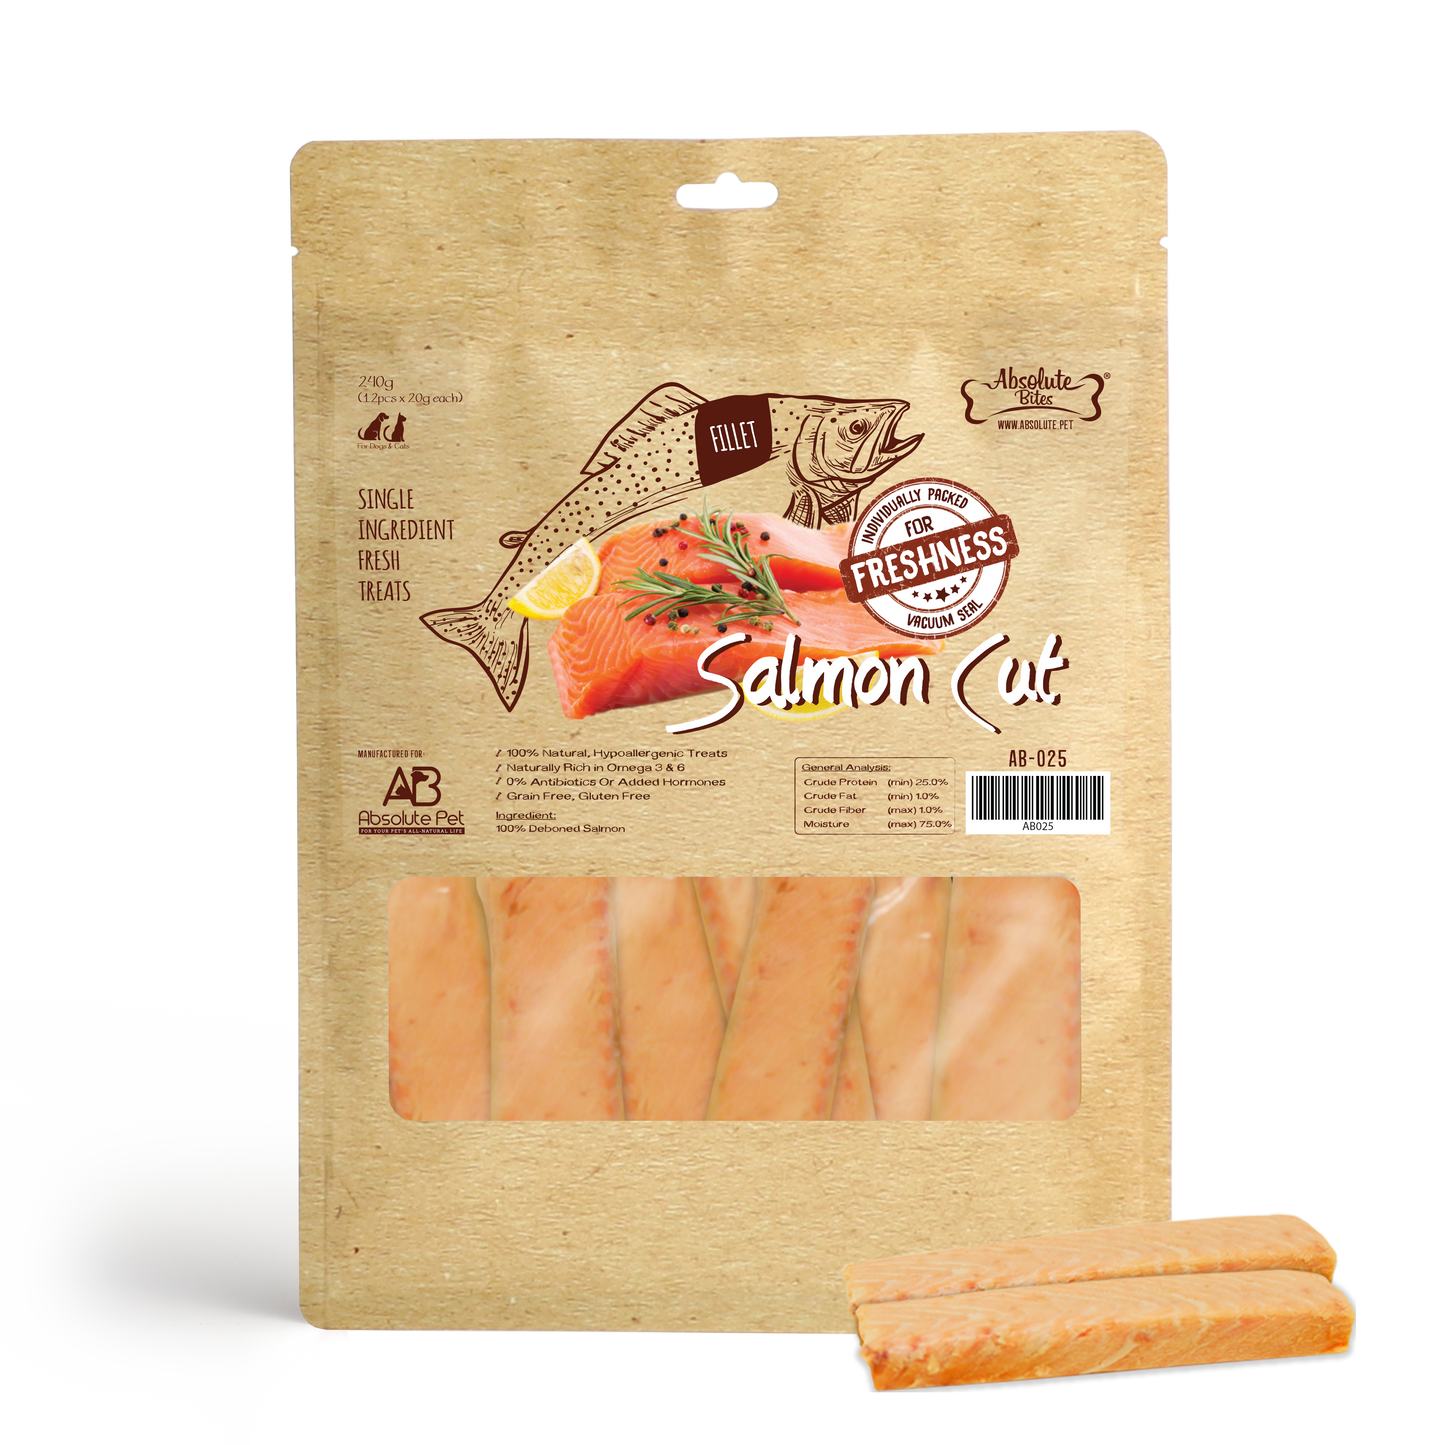 Absolute Bites Fresh Cut Salmon Cut Dog & Cat Treats (Large Bag) 240g